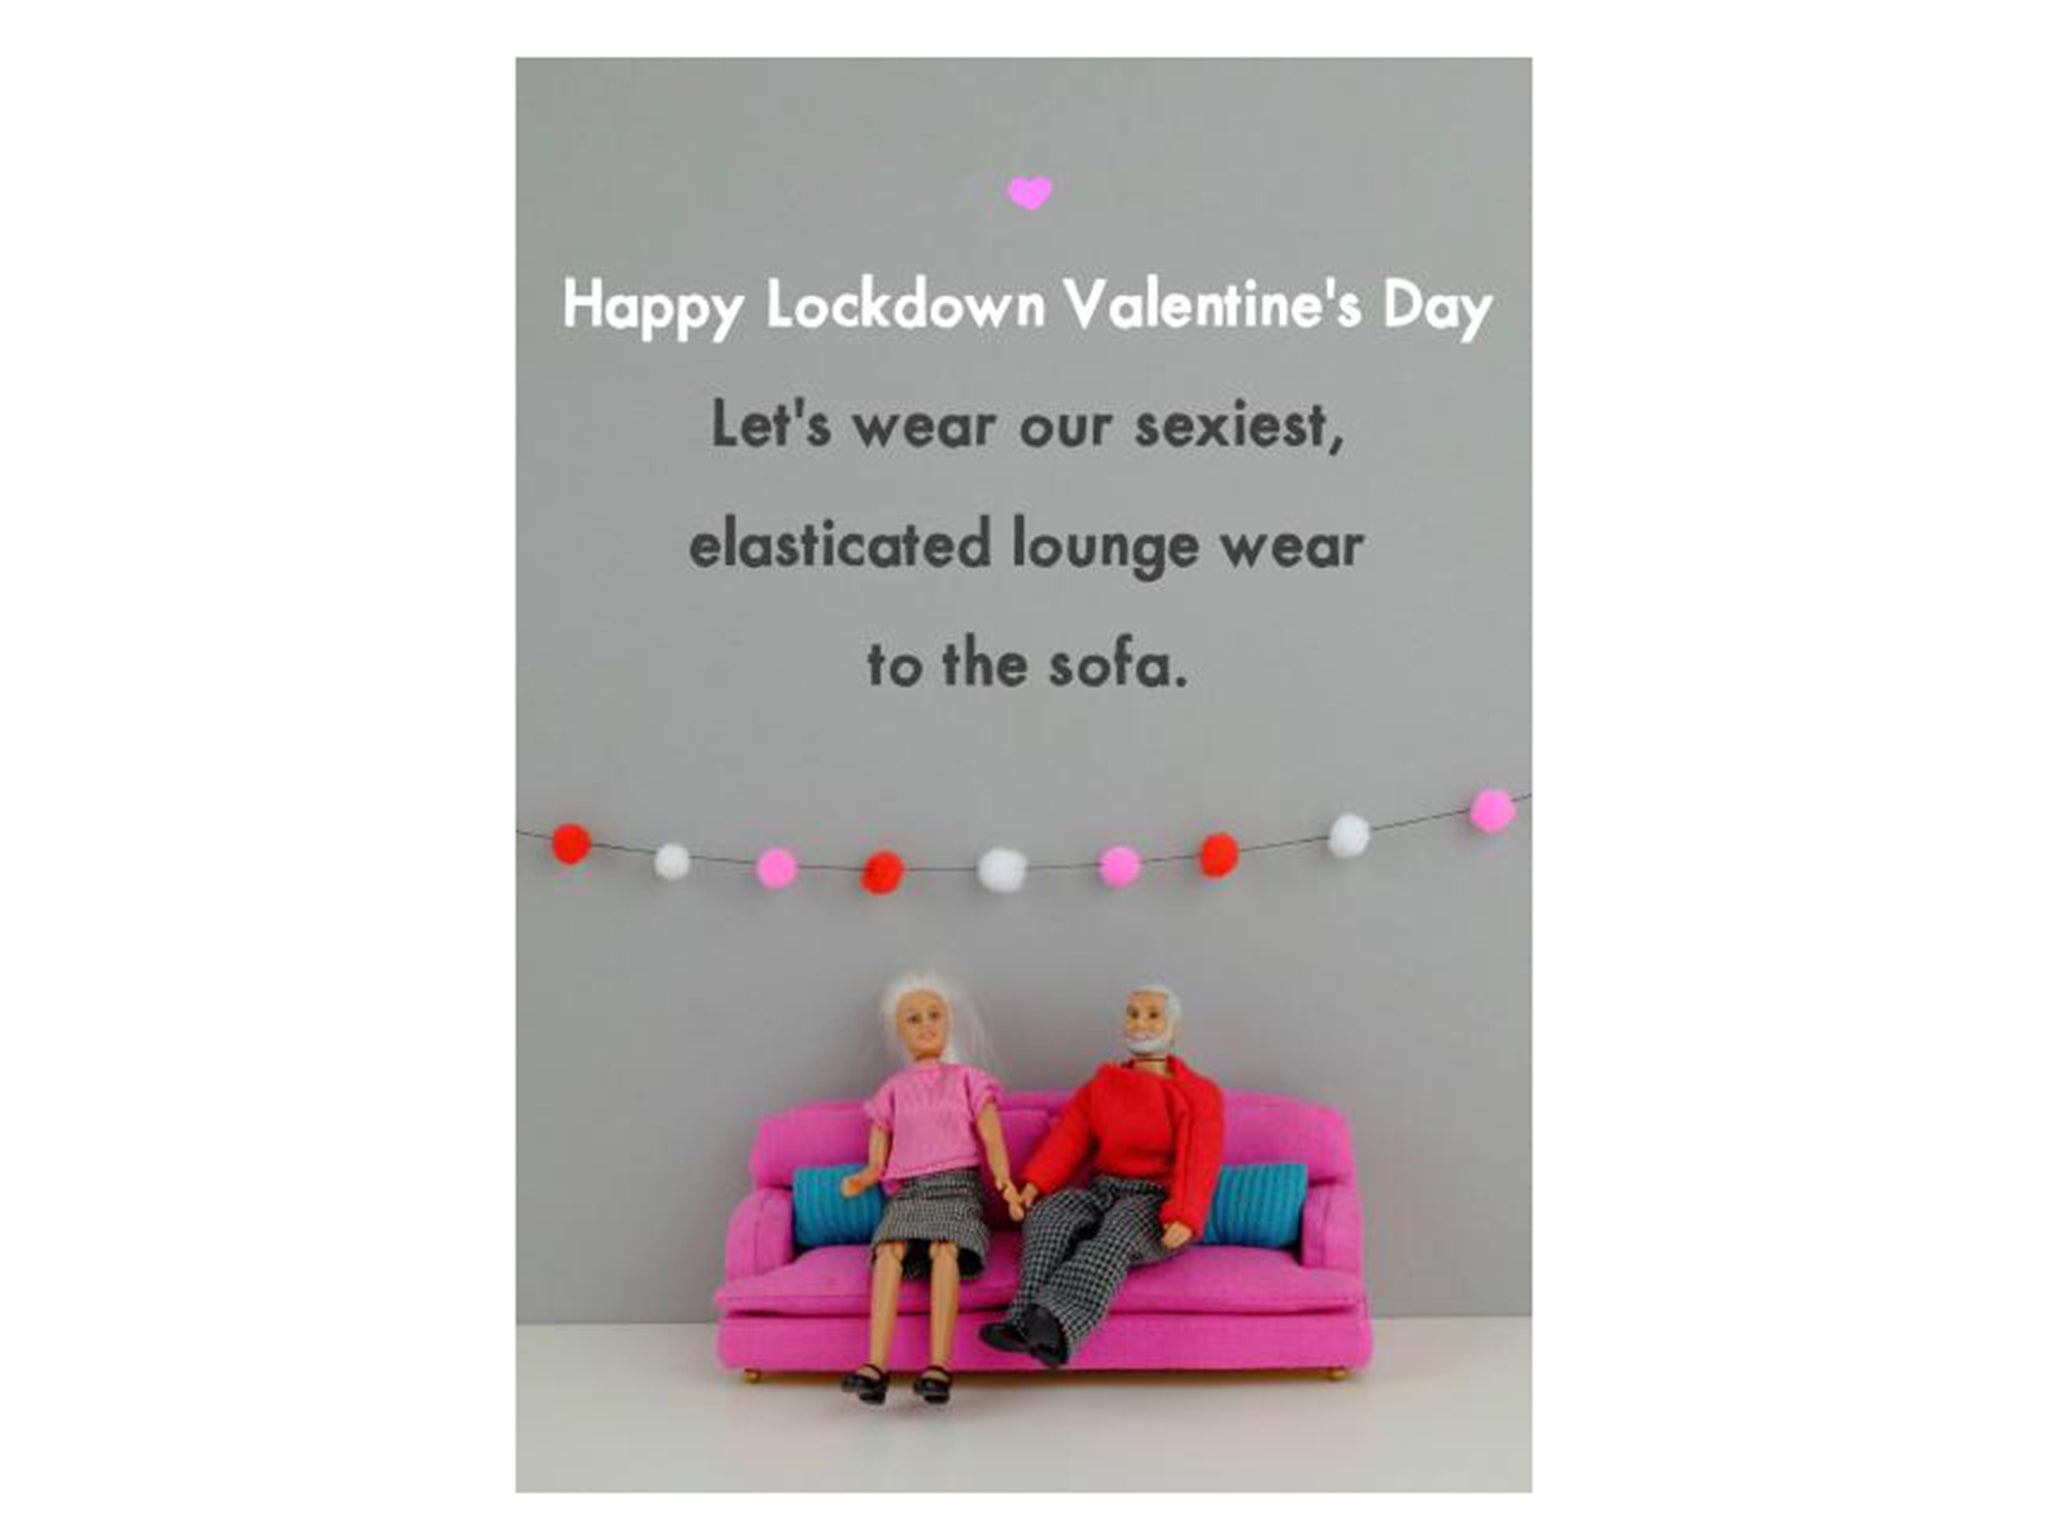 lockdown-valentines-day-card-funny-thortful-indybest